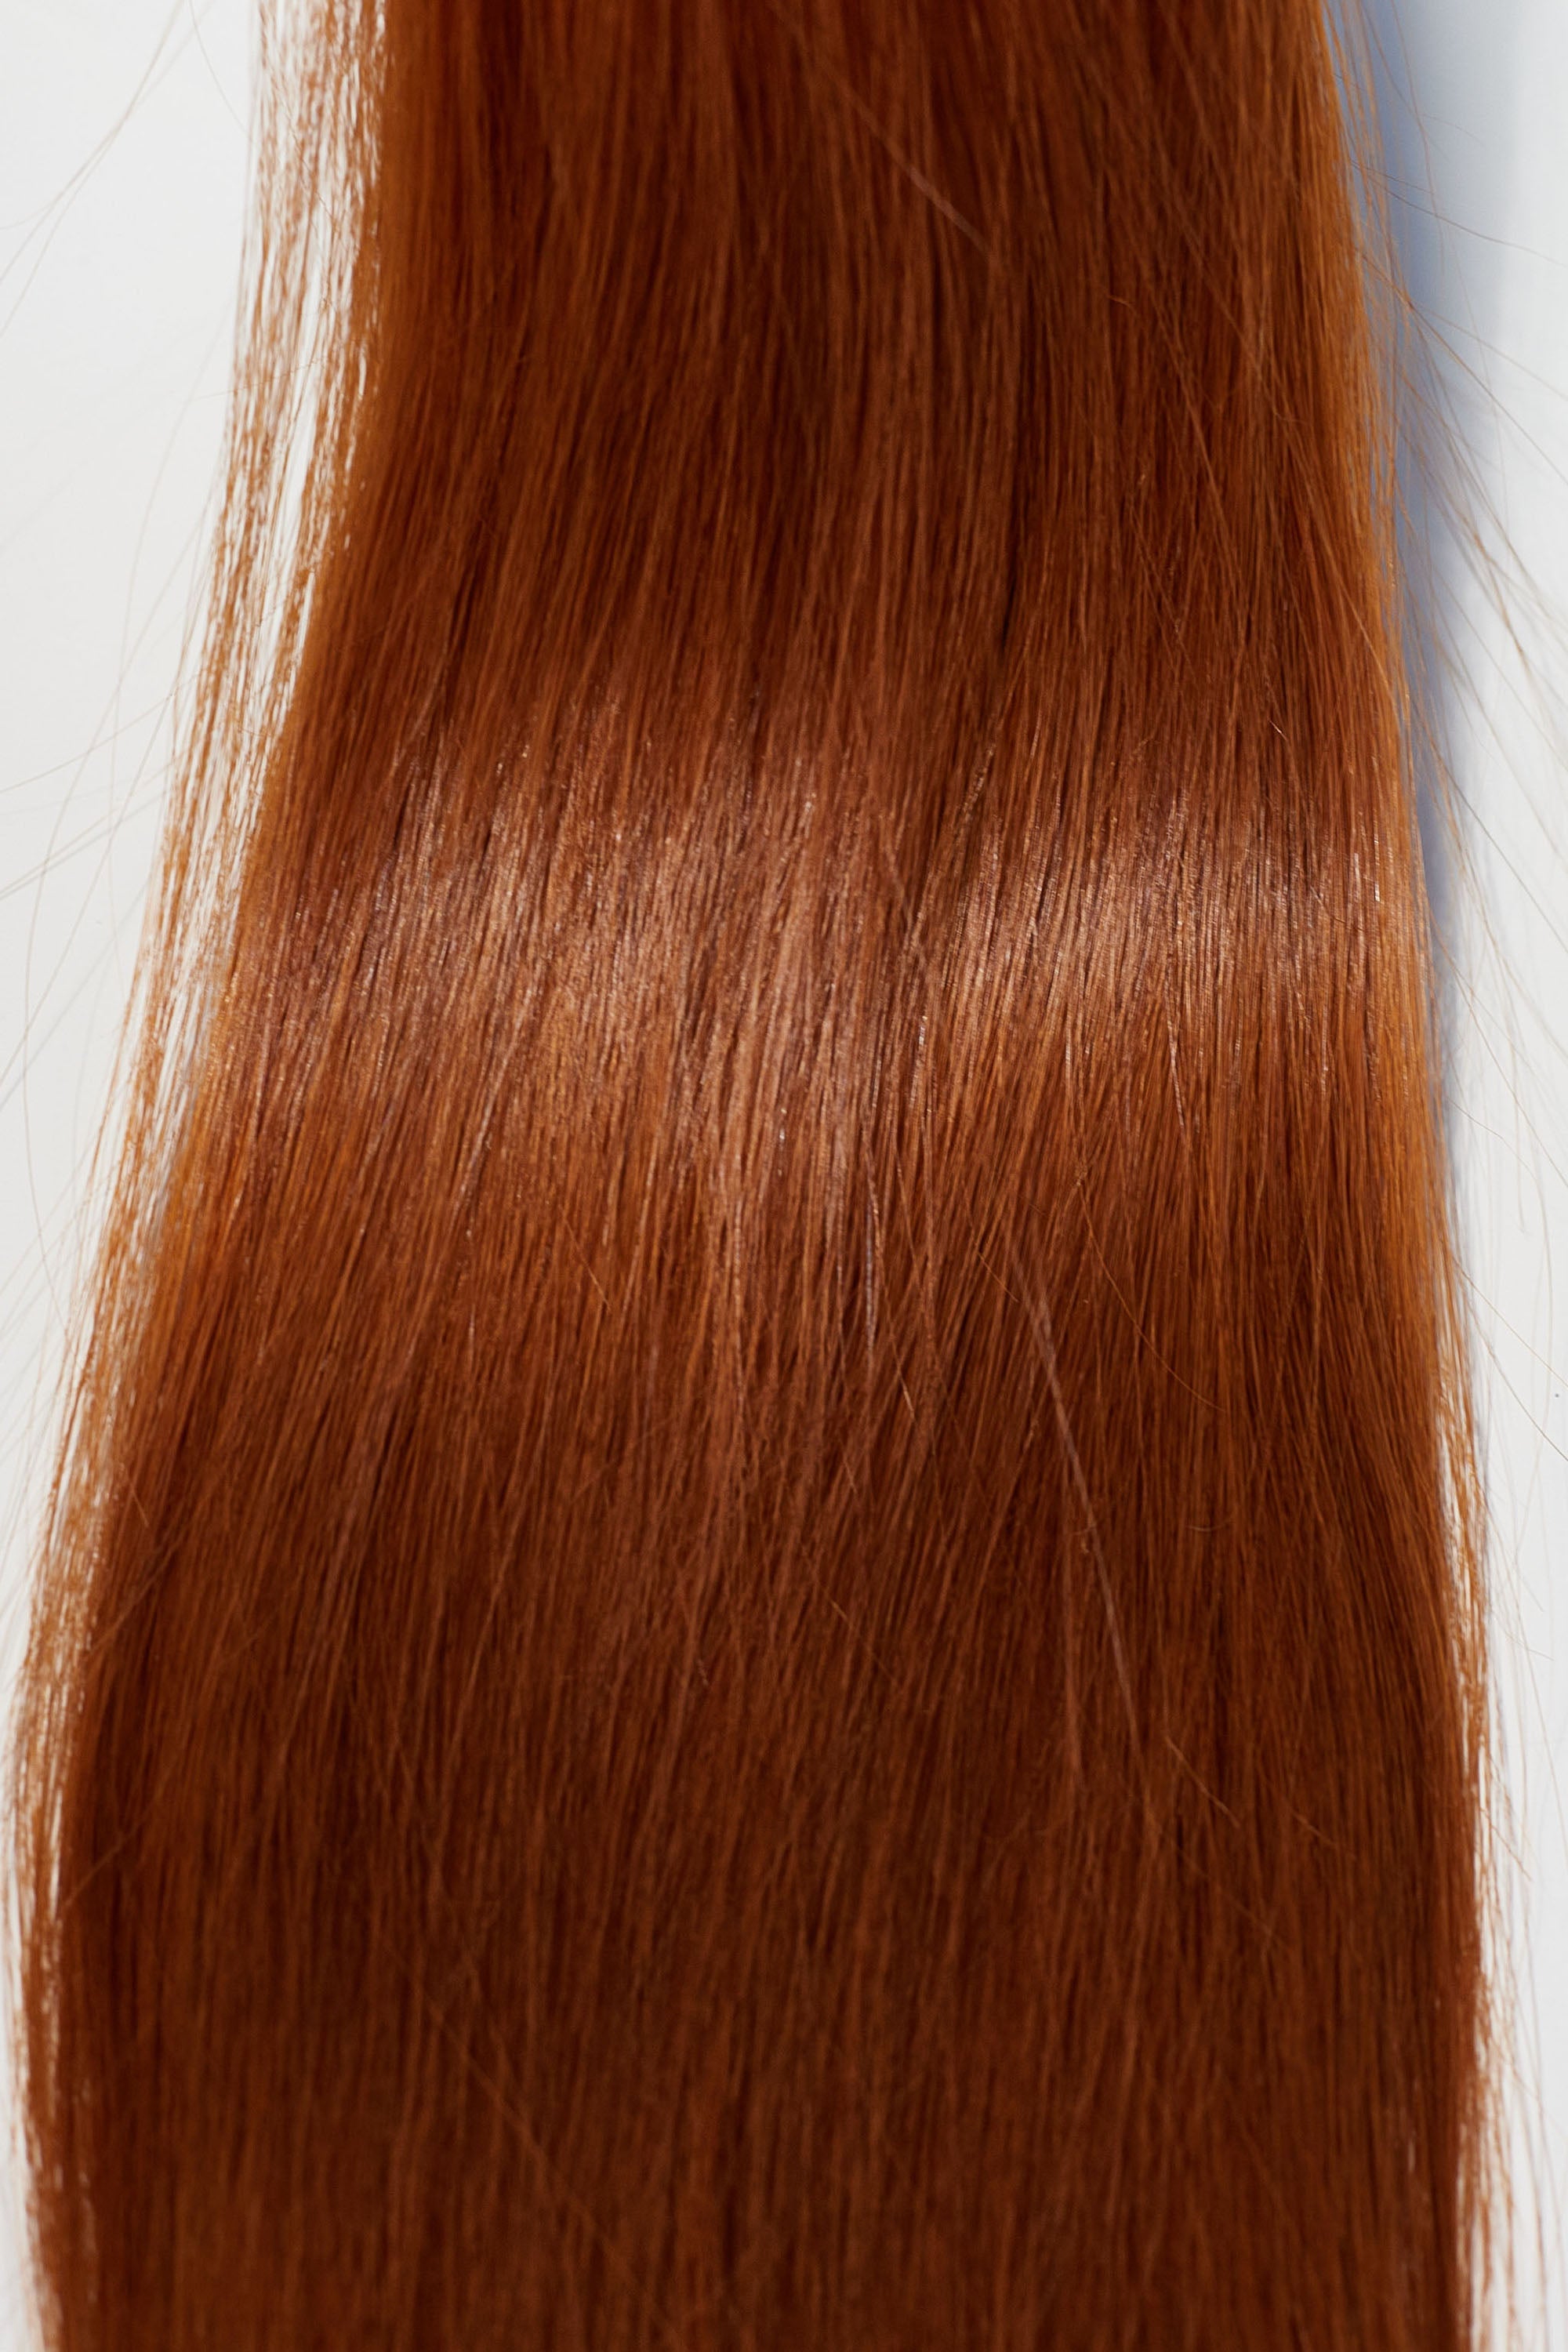 Behair professional Keratin Tip "Premium" 28" (70cm) Natural Straight Brilliant Copper #130 - 25g (Standart - 0.7g each pcs) hair extensions